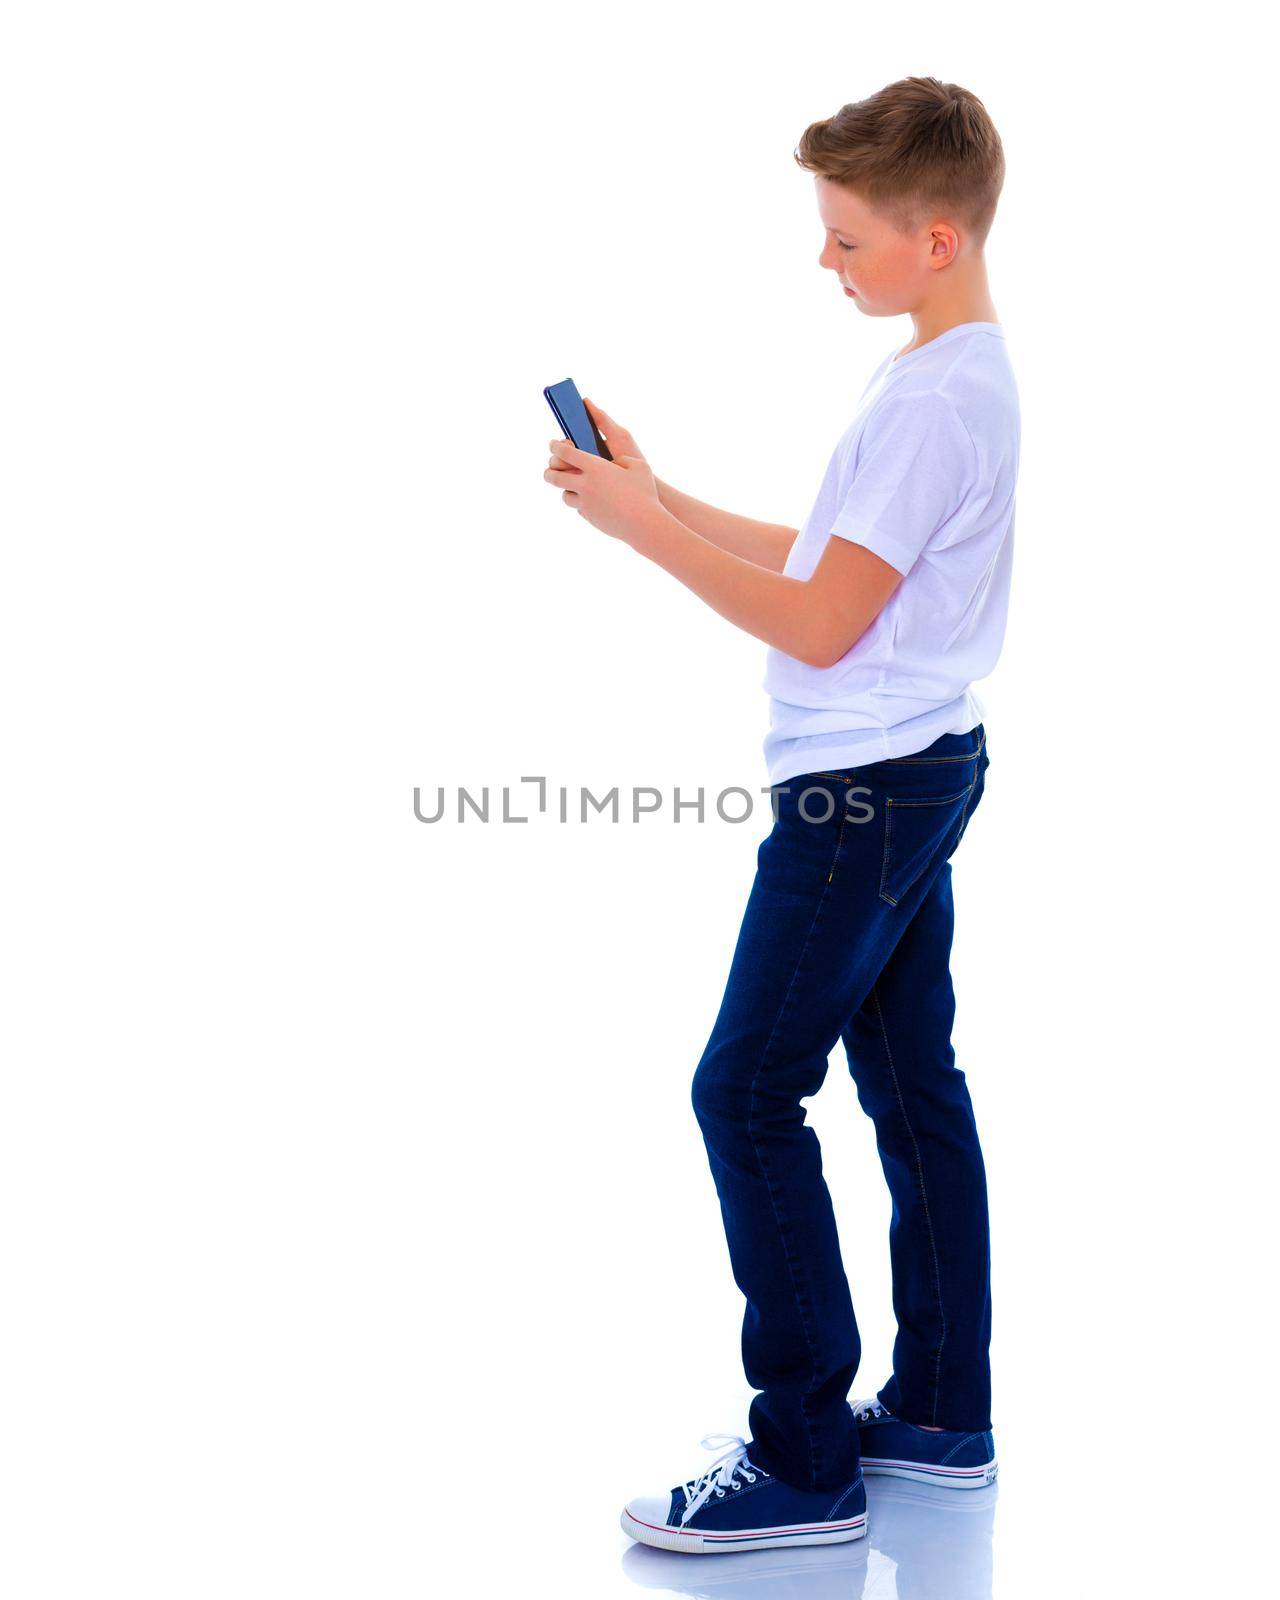 A little boy uses a mobile phone. by kolesnikov_studio